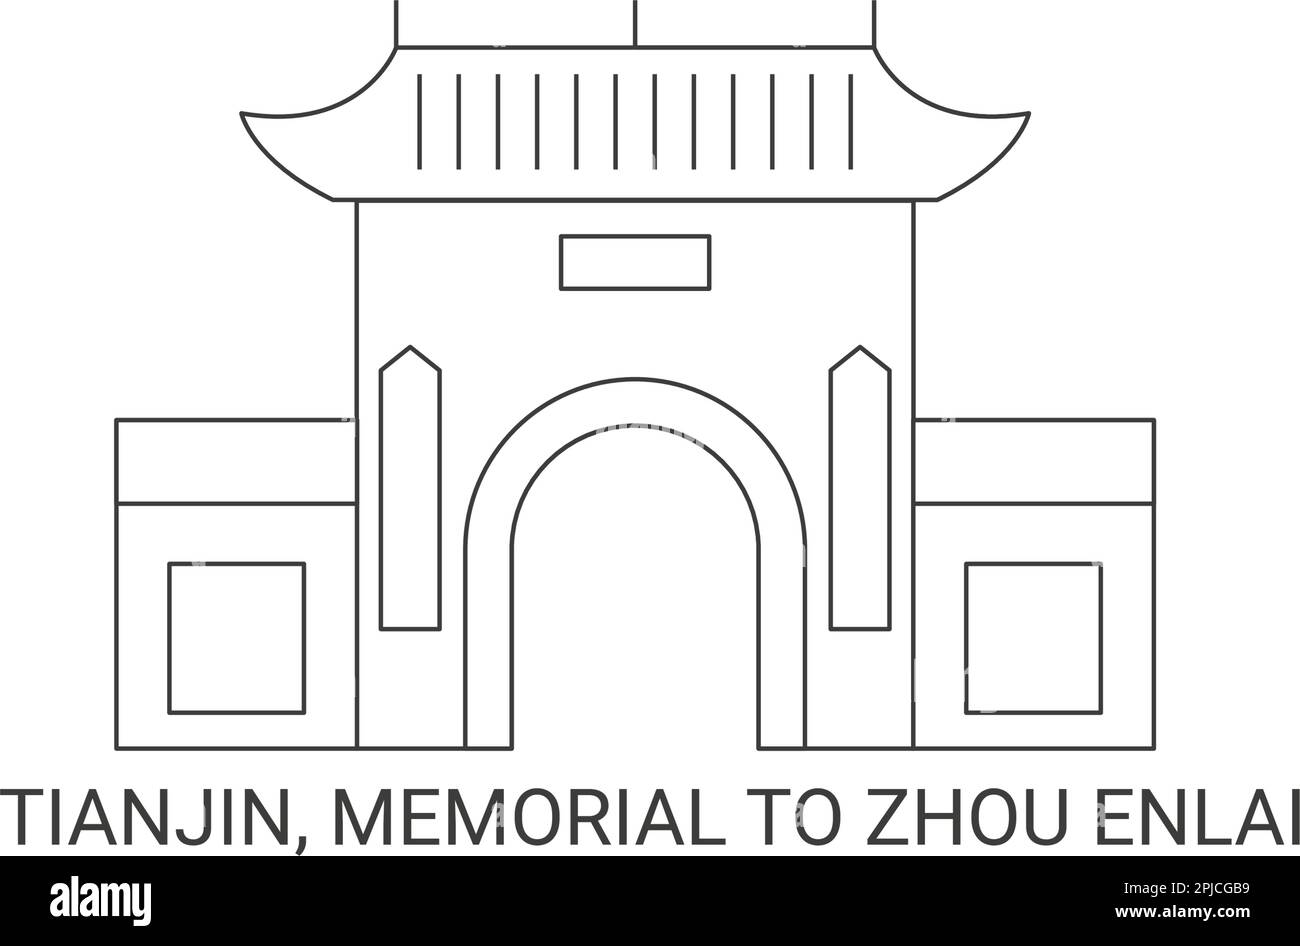 China, Tianjin, Memorial To Zhou Enlai, travel landmark vector illustration Stock Vector